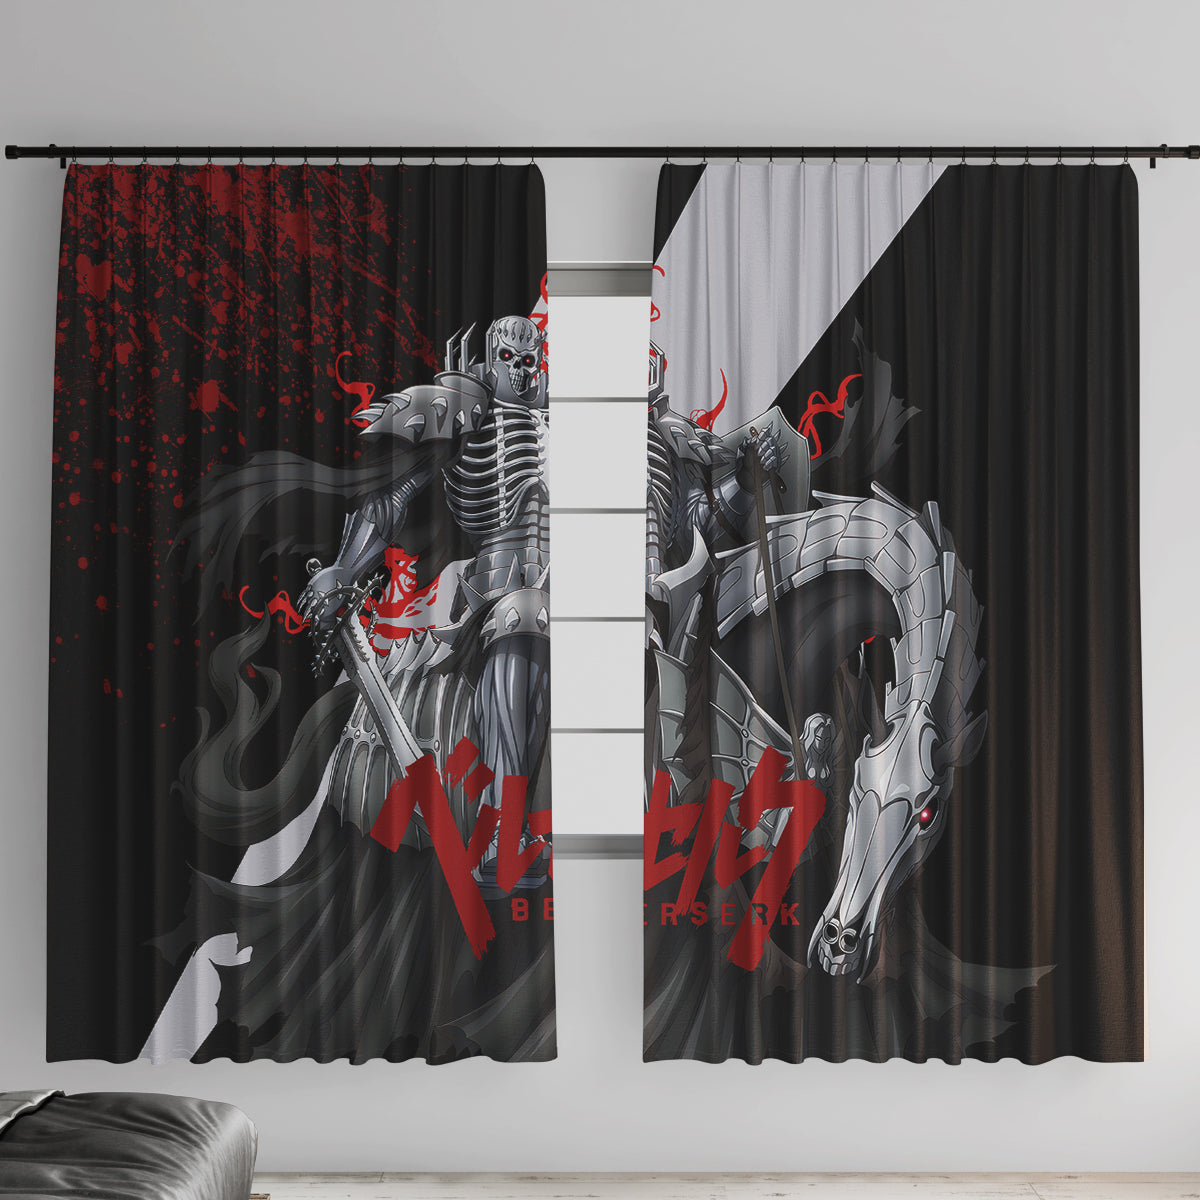 The Skull Knight Berserk Window Curtain Black Blood Style